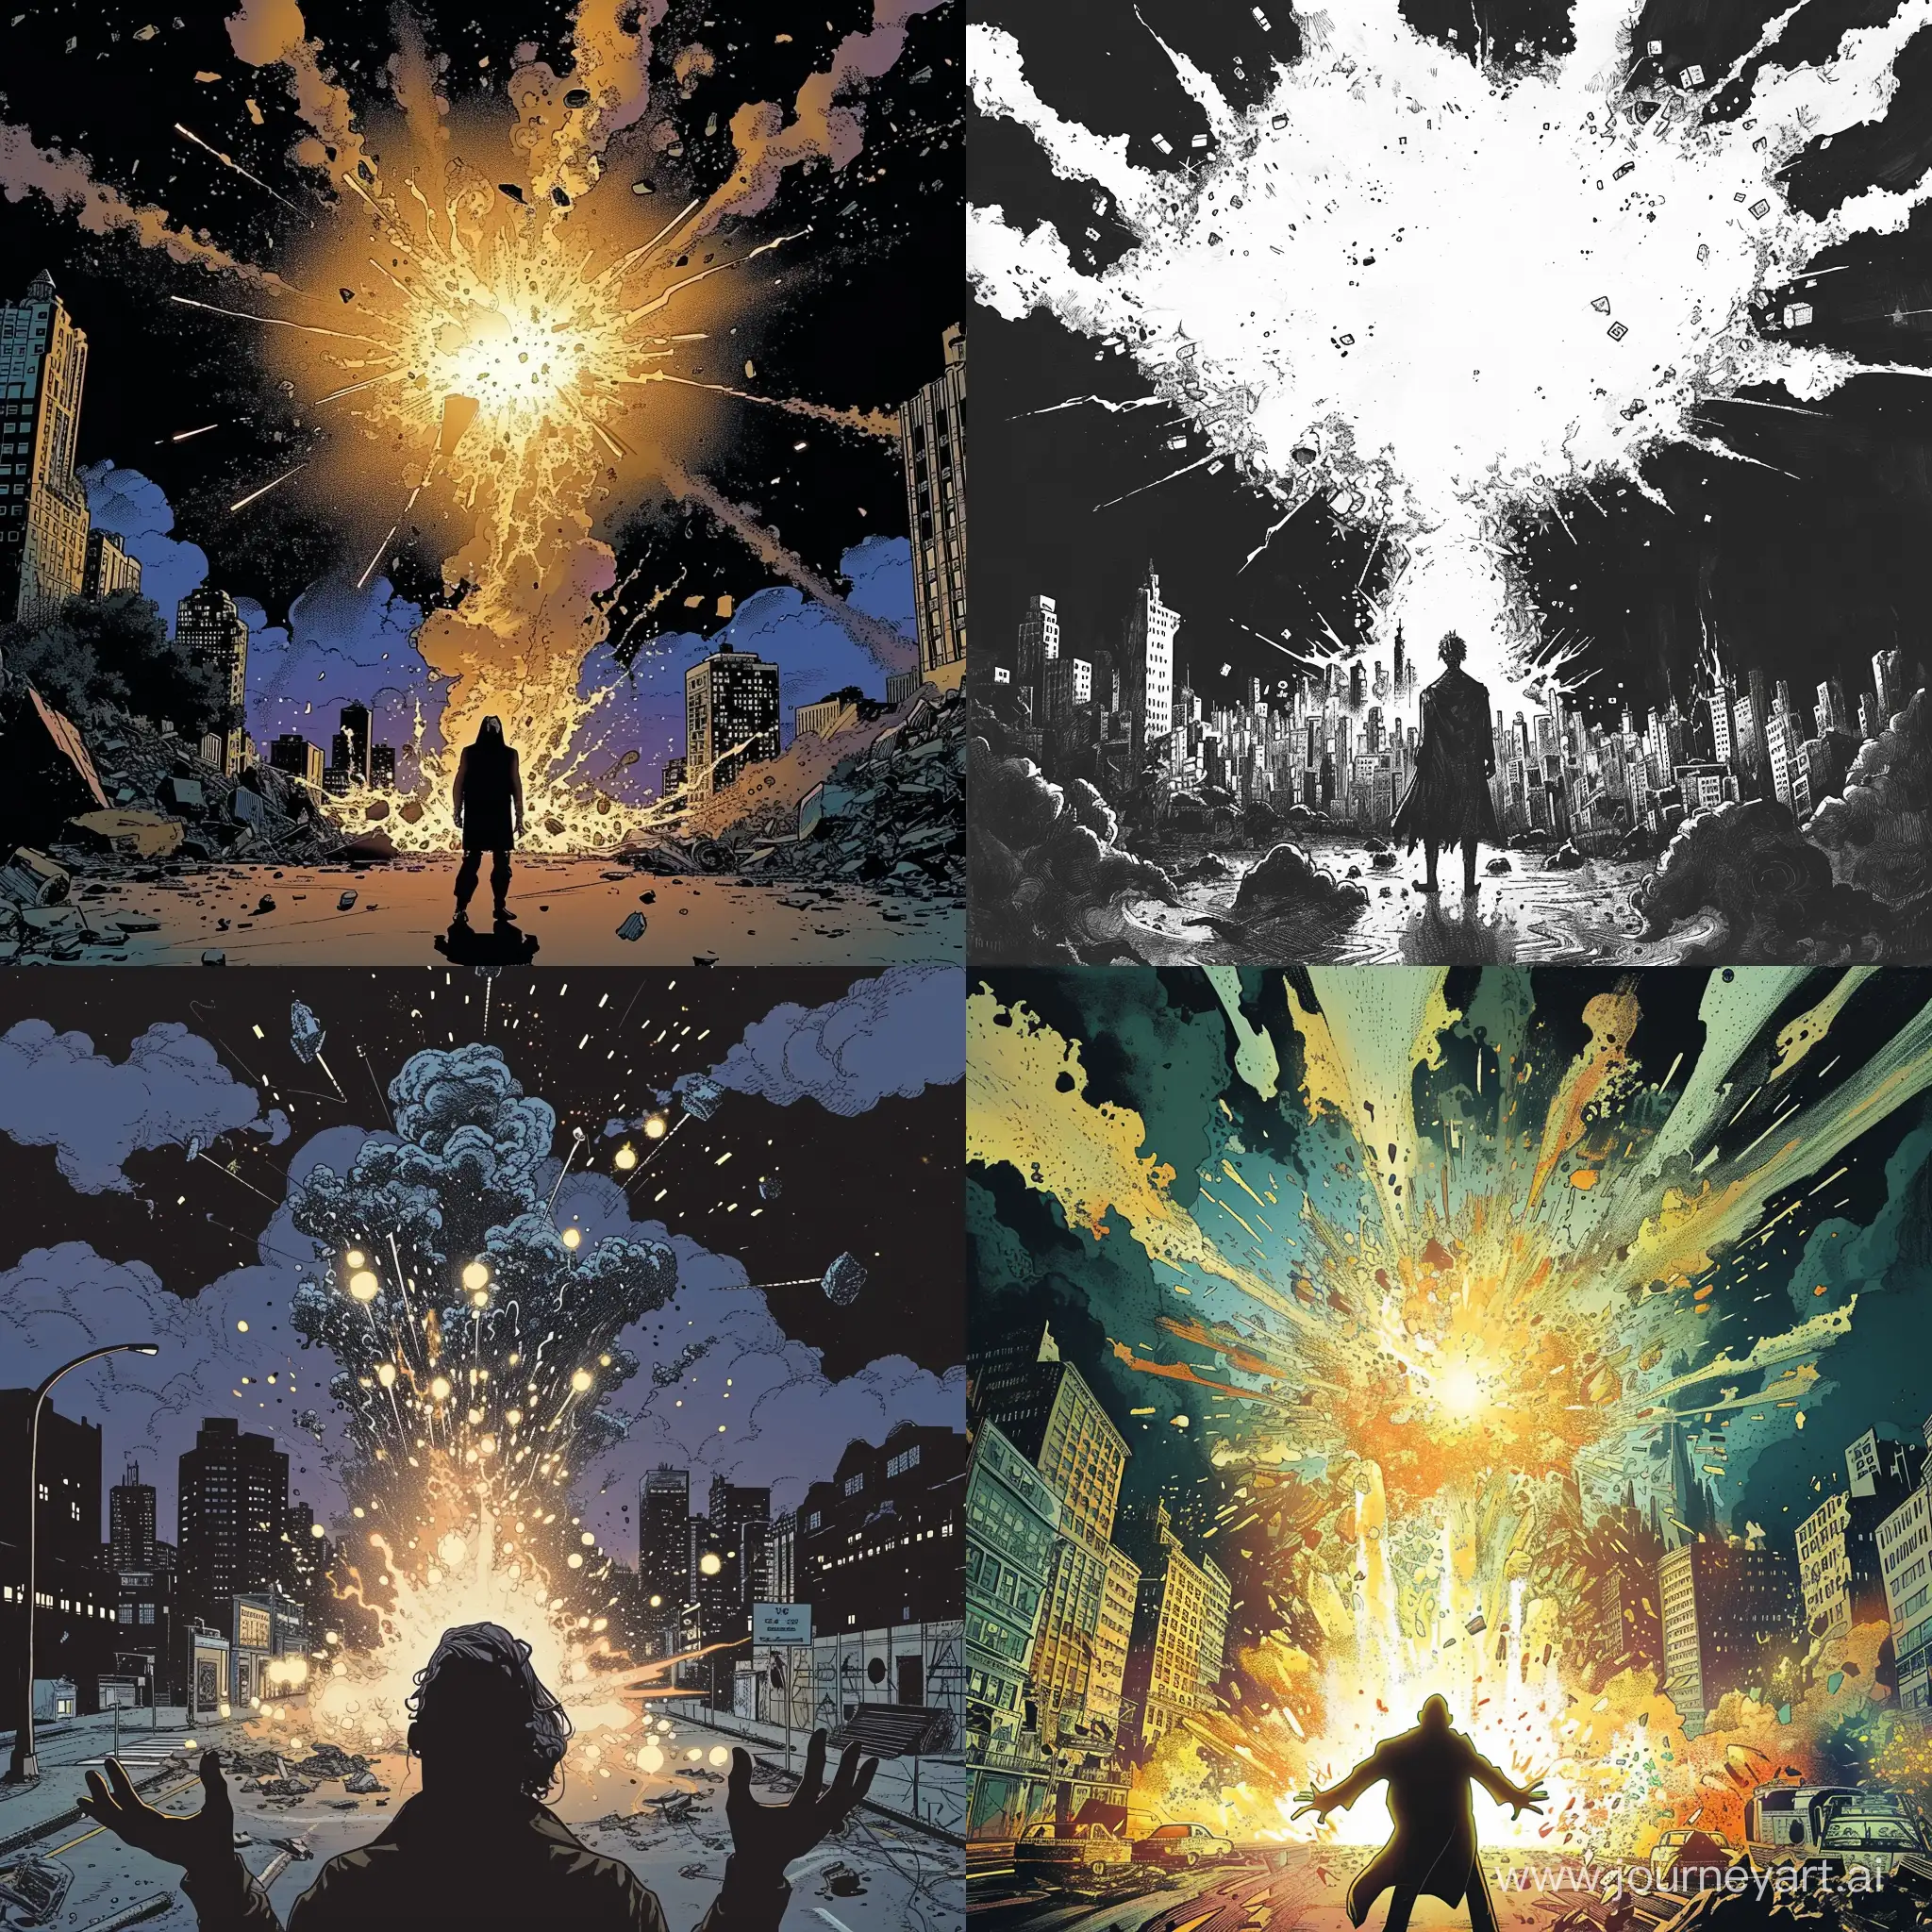 Magic-City-Explosion-Art-Rorschachs-Test-Interpretation